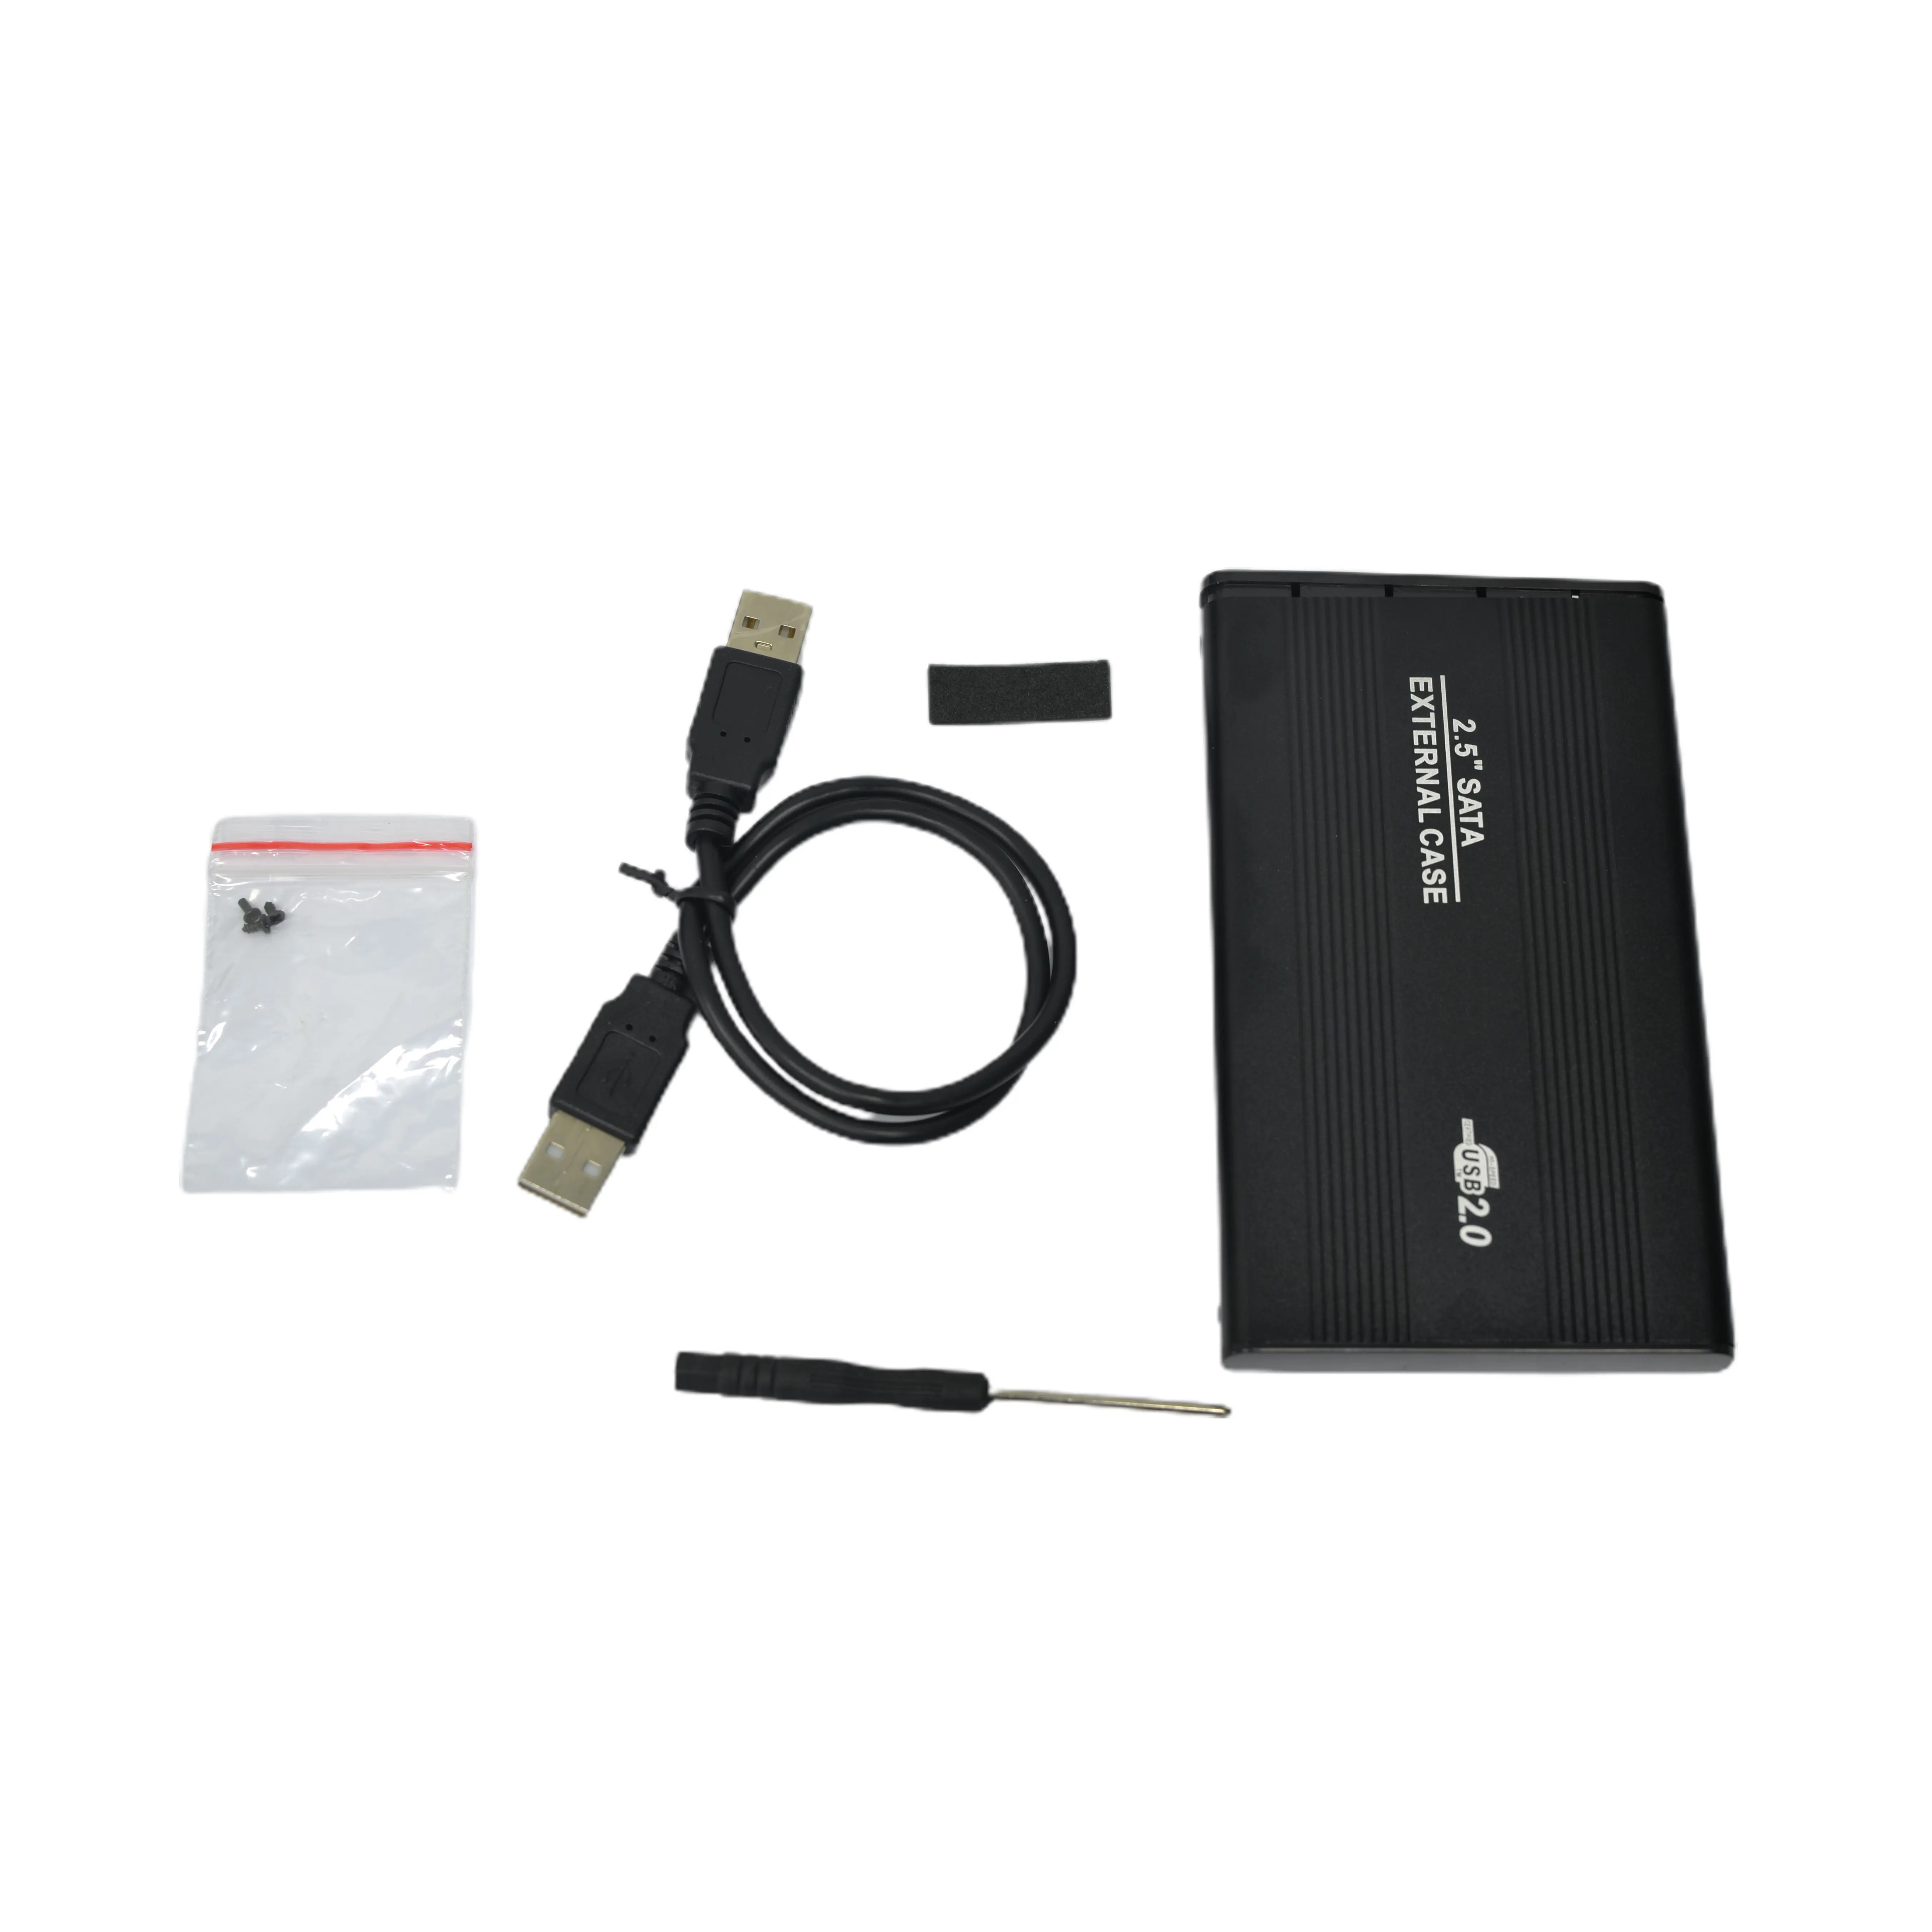 Stock USB 2,0 USB 3,0 disco duro SATA carcasa externa de la caja de 2,5 pulgadas de disco duro para PC portátil de escritorio